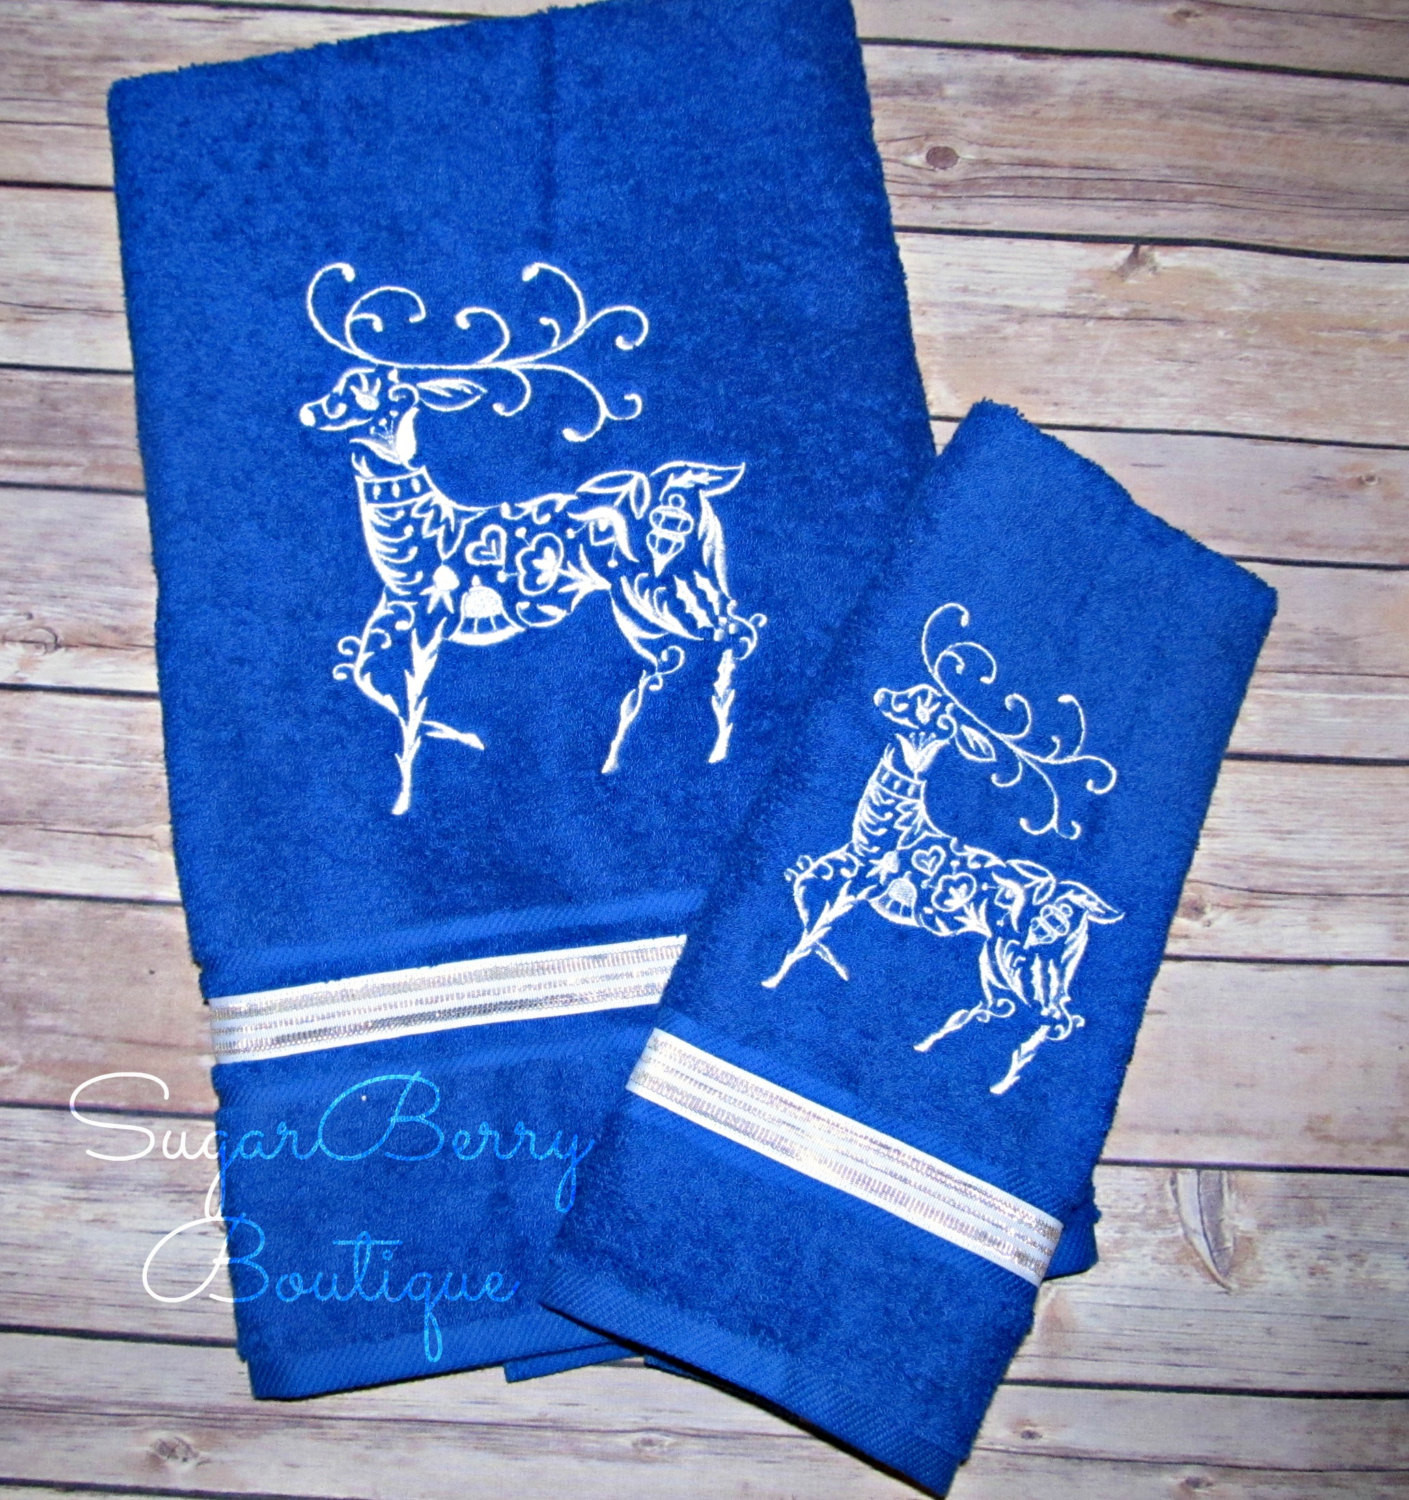 Christmas Bathroom Towels
 Christmas towels Reindeer towels Holiday Bath Decor